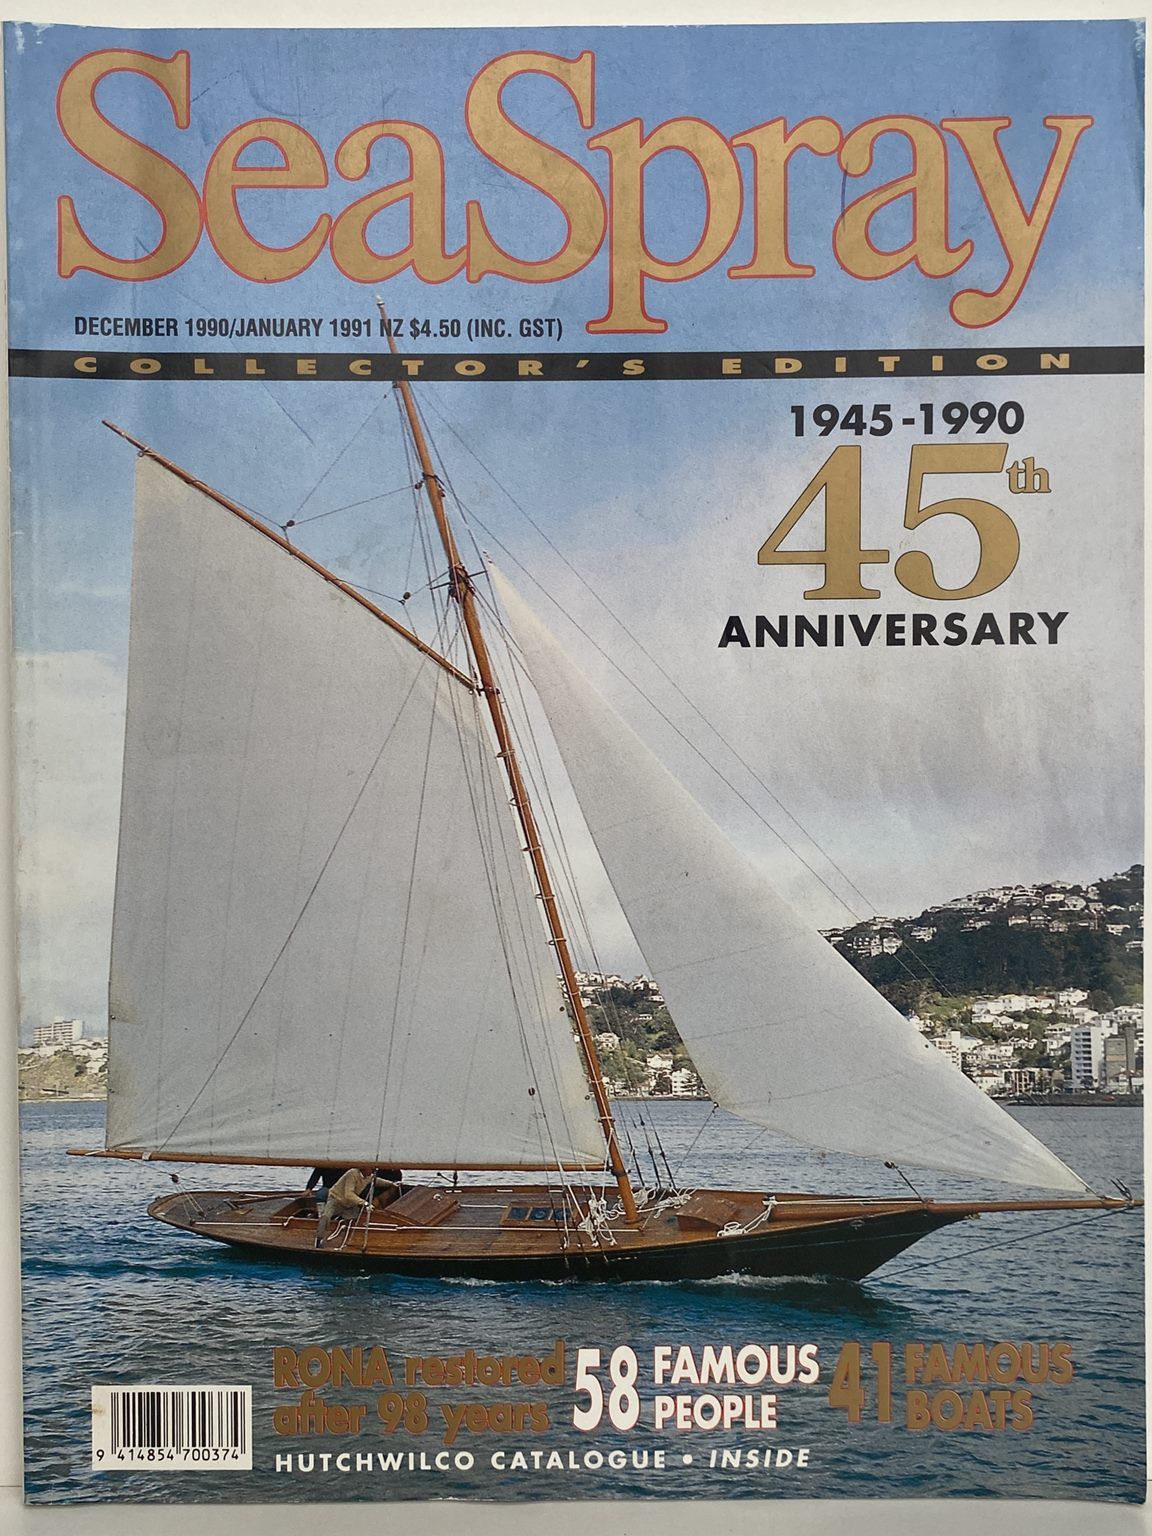 VINTAGE MAGAZINE: Sea Spray Dec 1990 / Jan 1991 - 45th Anniversary